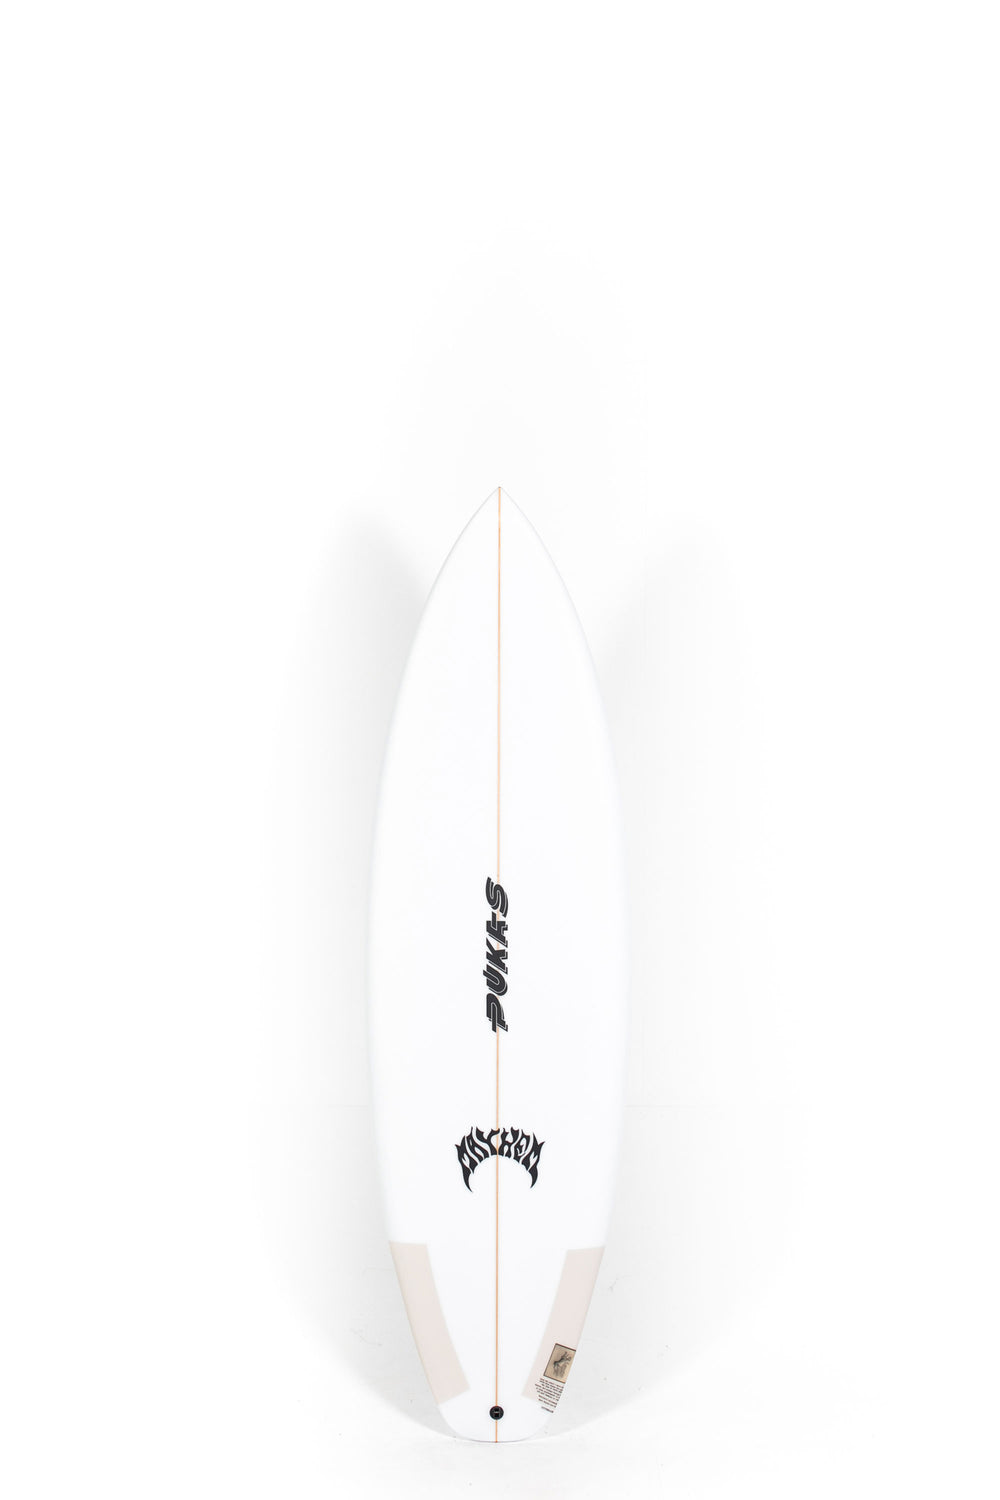 Pukas Surf Shop - Pukas Surfboard - HYPERLINK by Matt Biolos -  6'0